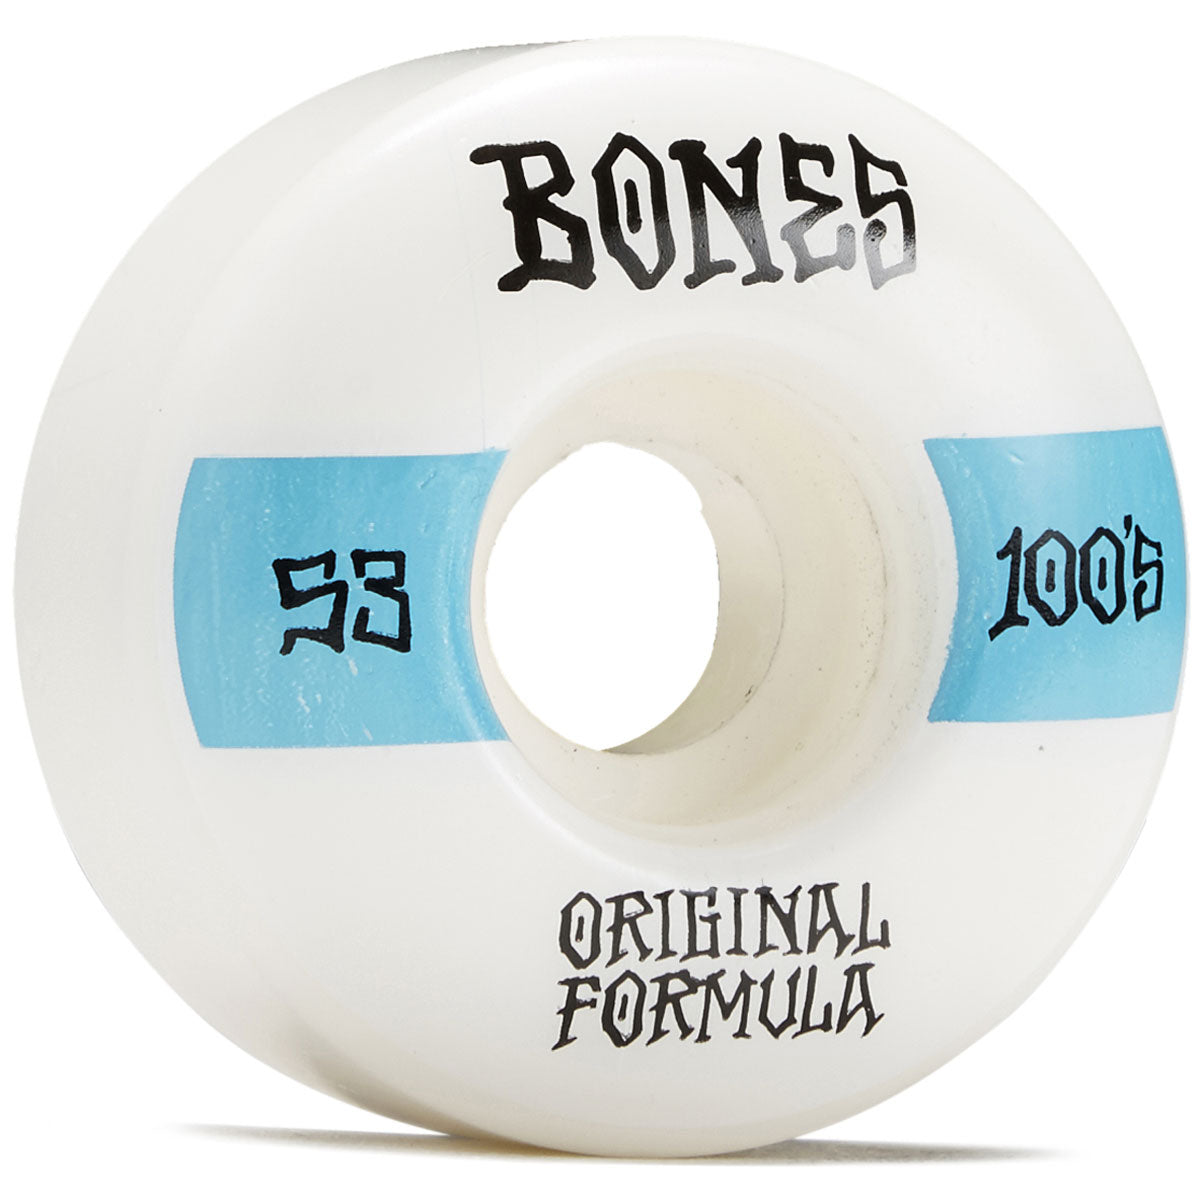 Bones 100s OG Formula V4 Wide Skateboard Wheels - White - 53mm image 1